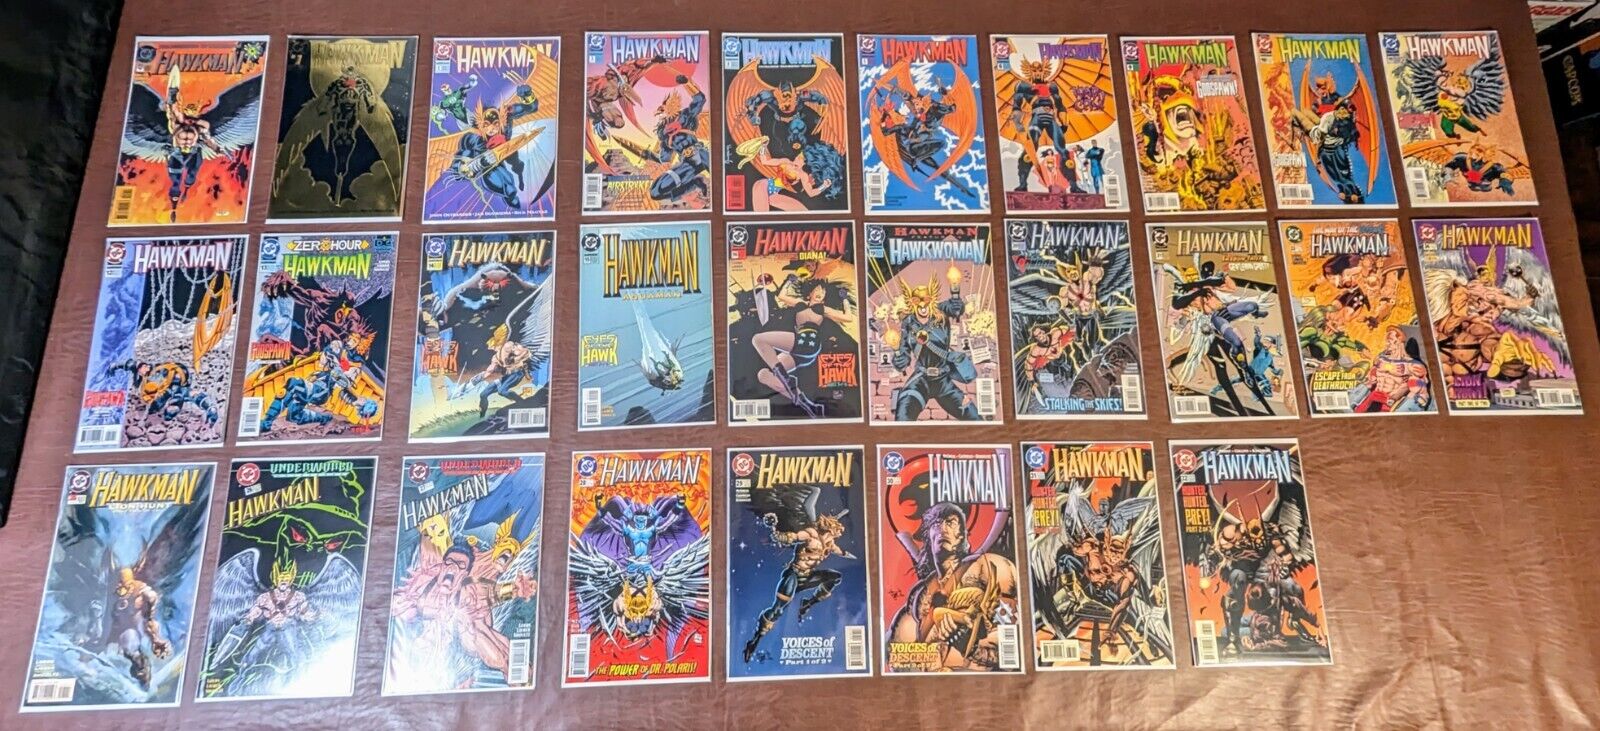 DC Comics Hawkman Issues 0-6, 9-21, 23-32. 28 Total Issues. VF - NM Range 1993